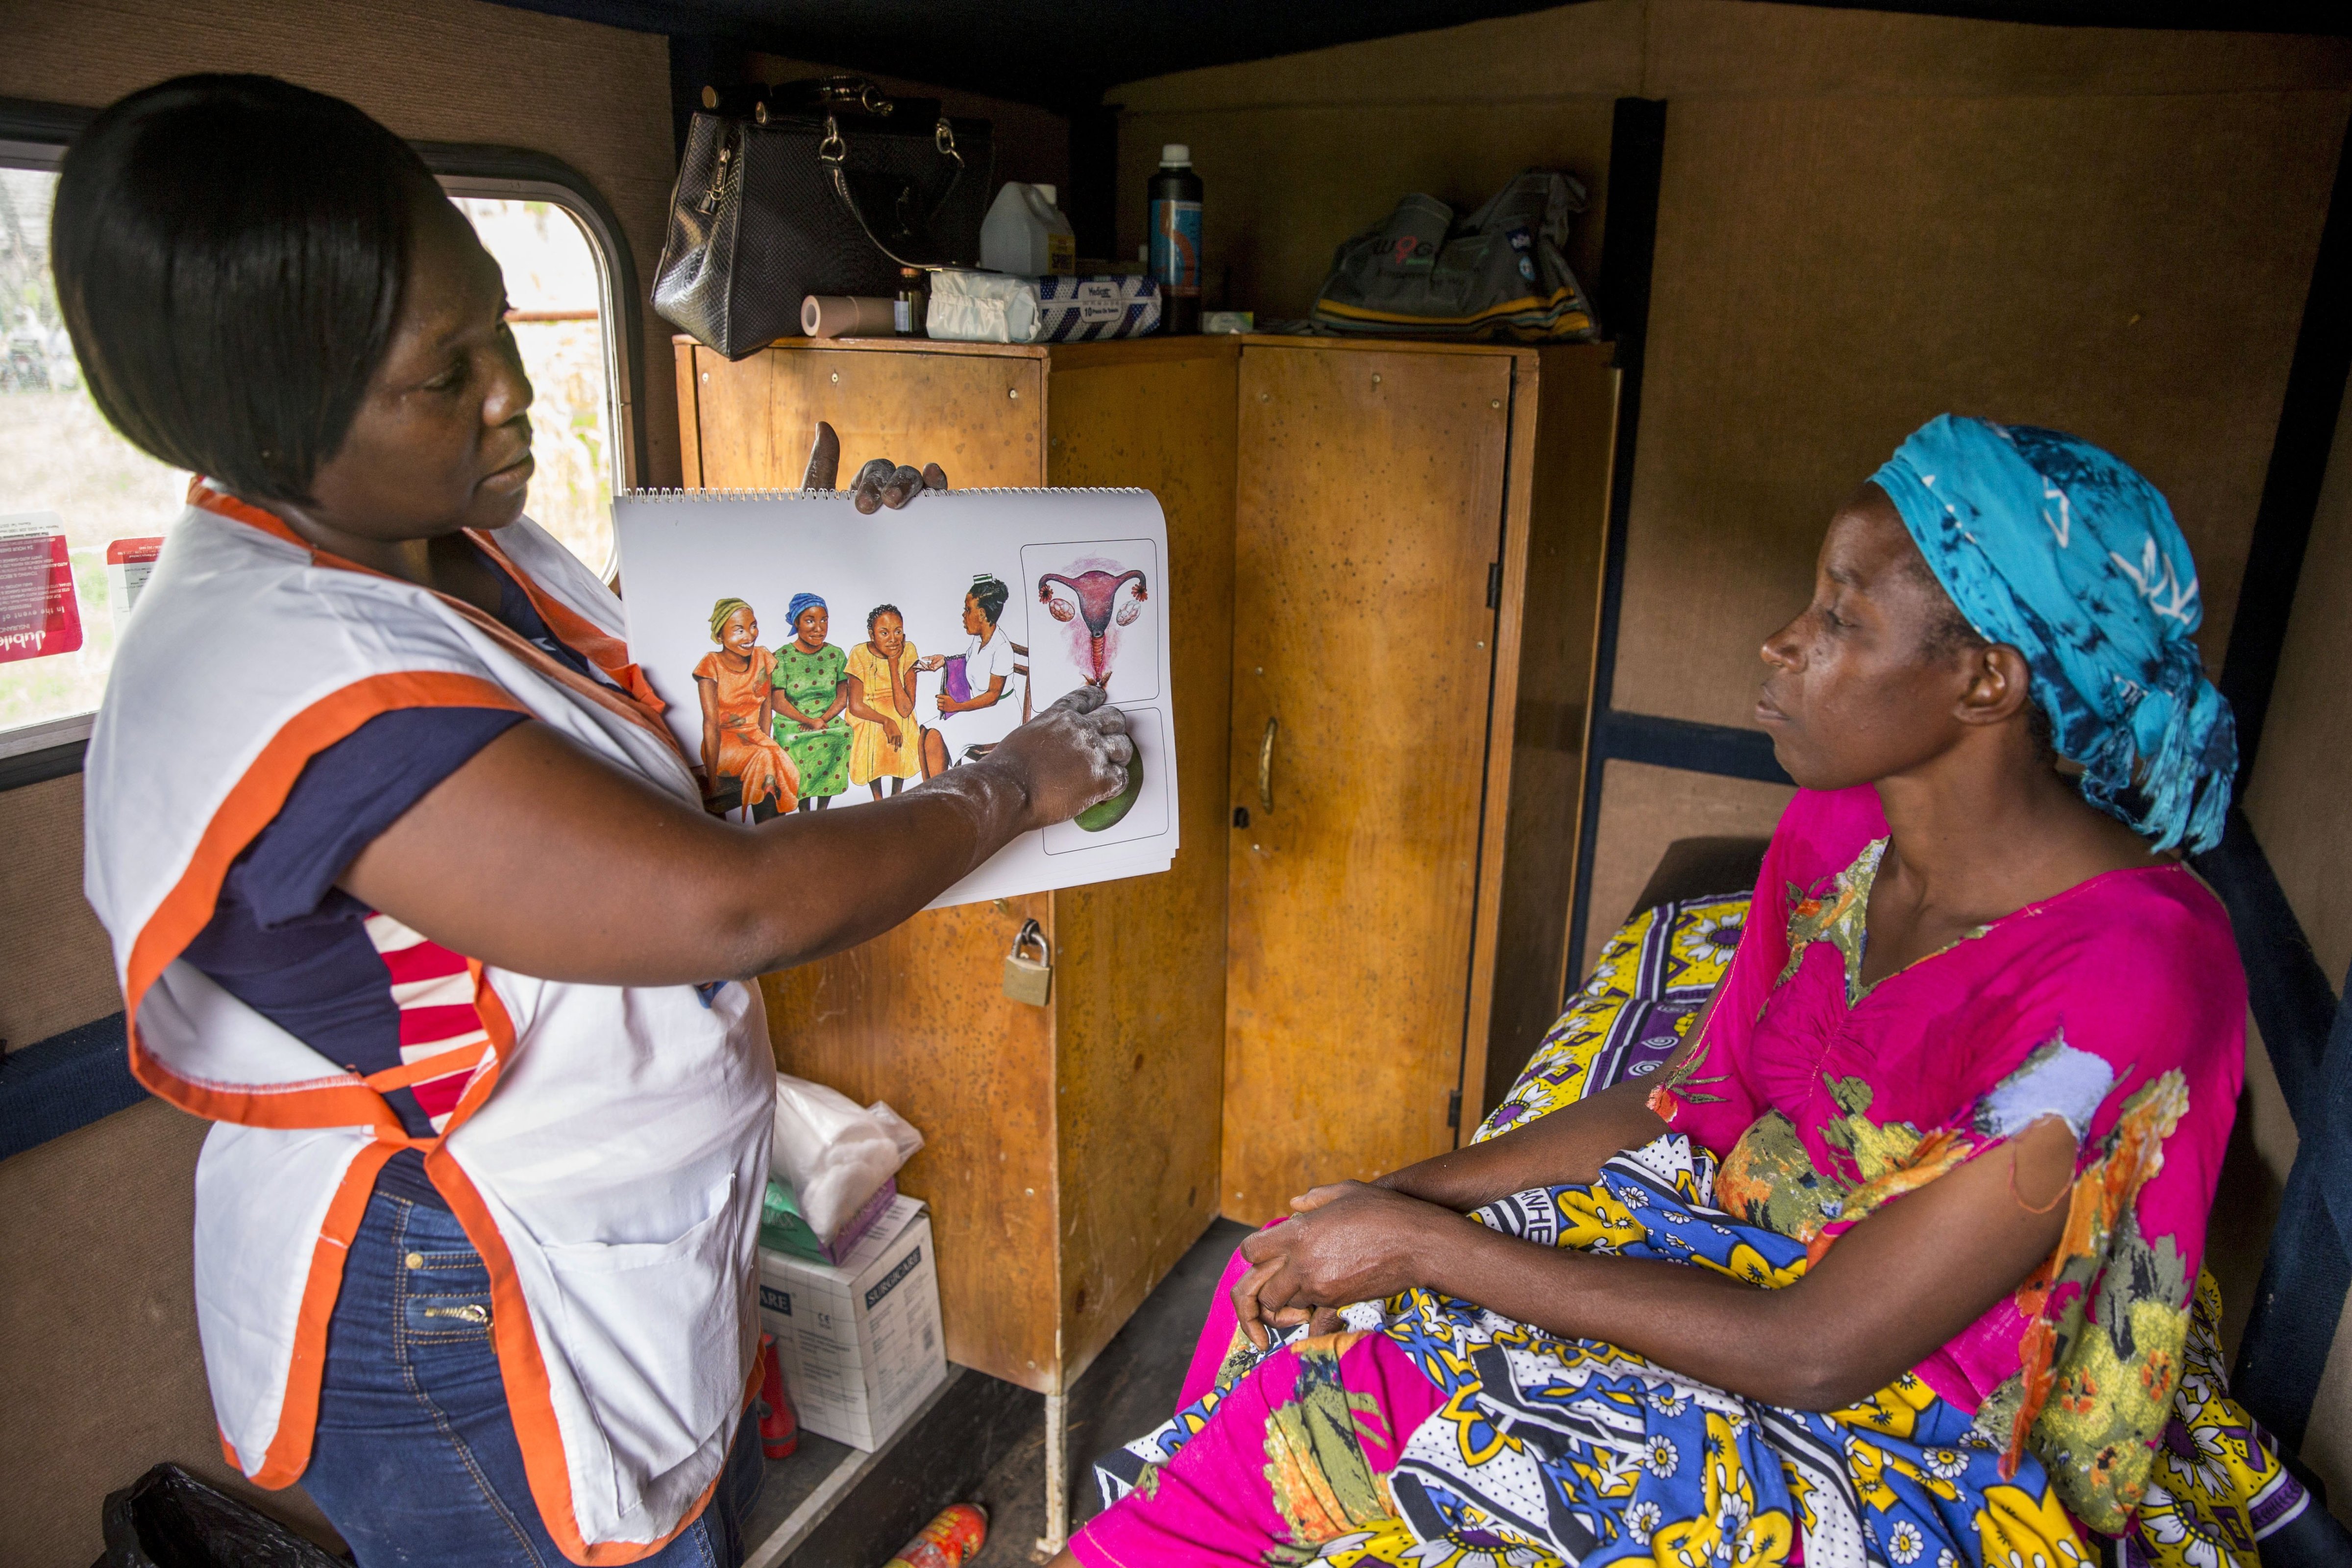 A clinic providing women in rural areas family planning options near Mombasa, Kenya. (Jonathan Torgovnik—Getty Images)